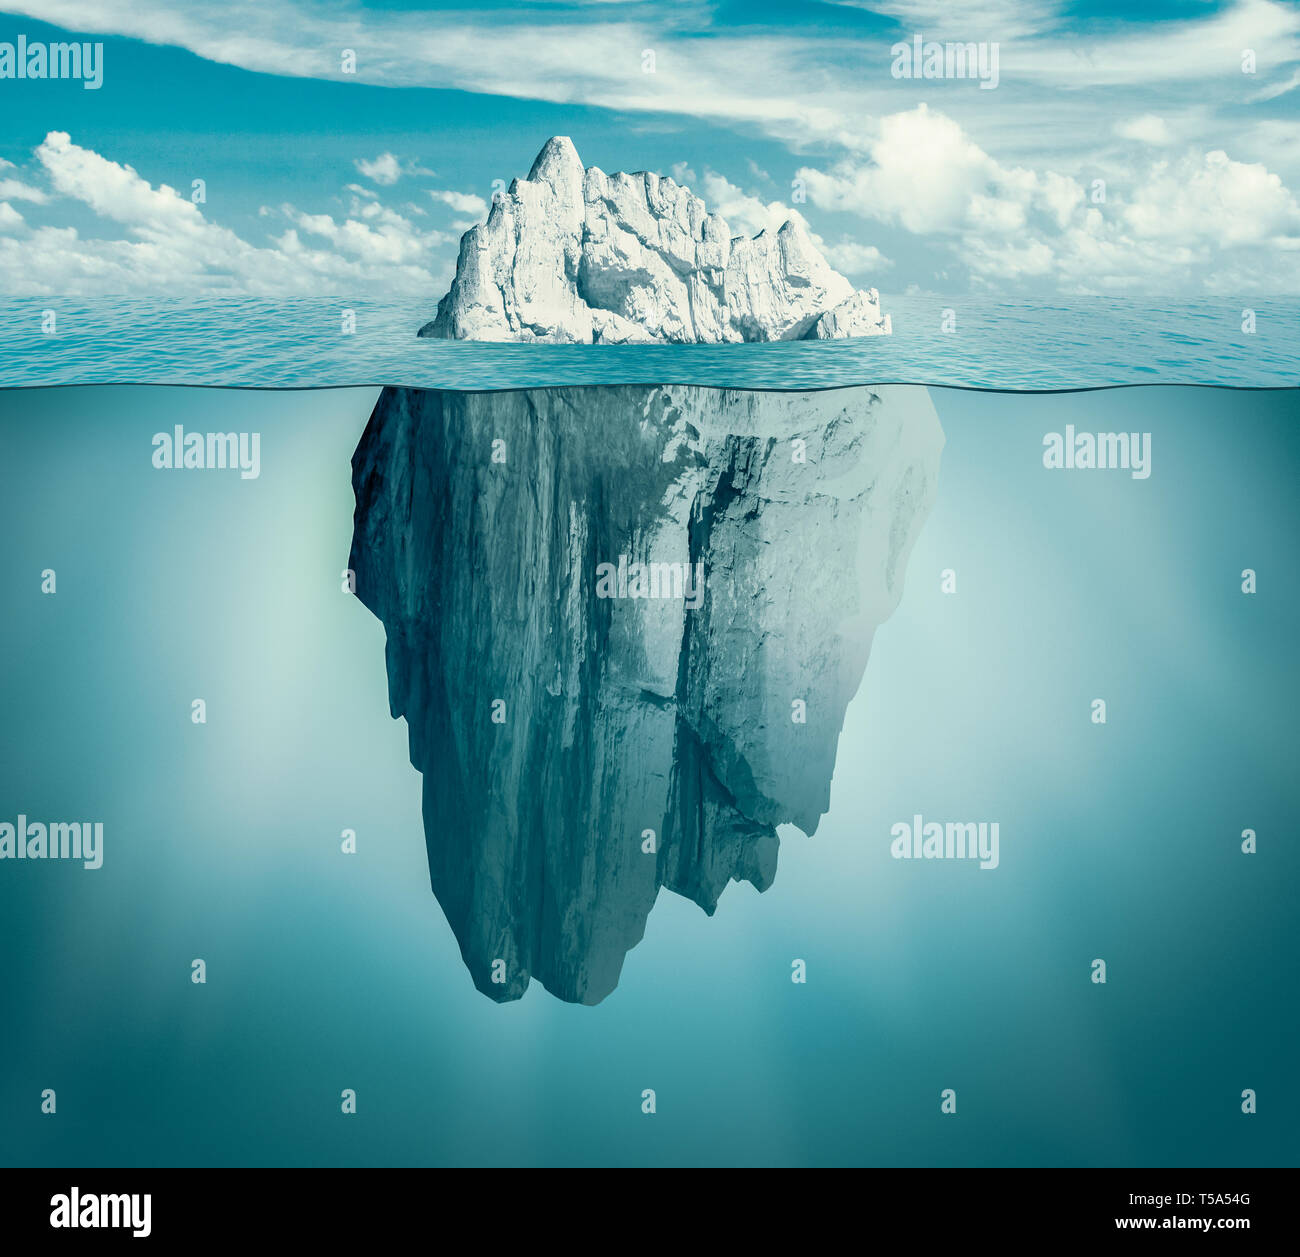 Iceberg in ocean as hidden threat or danger concept Stock Photo - Alamy